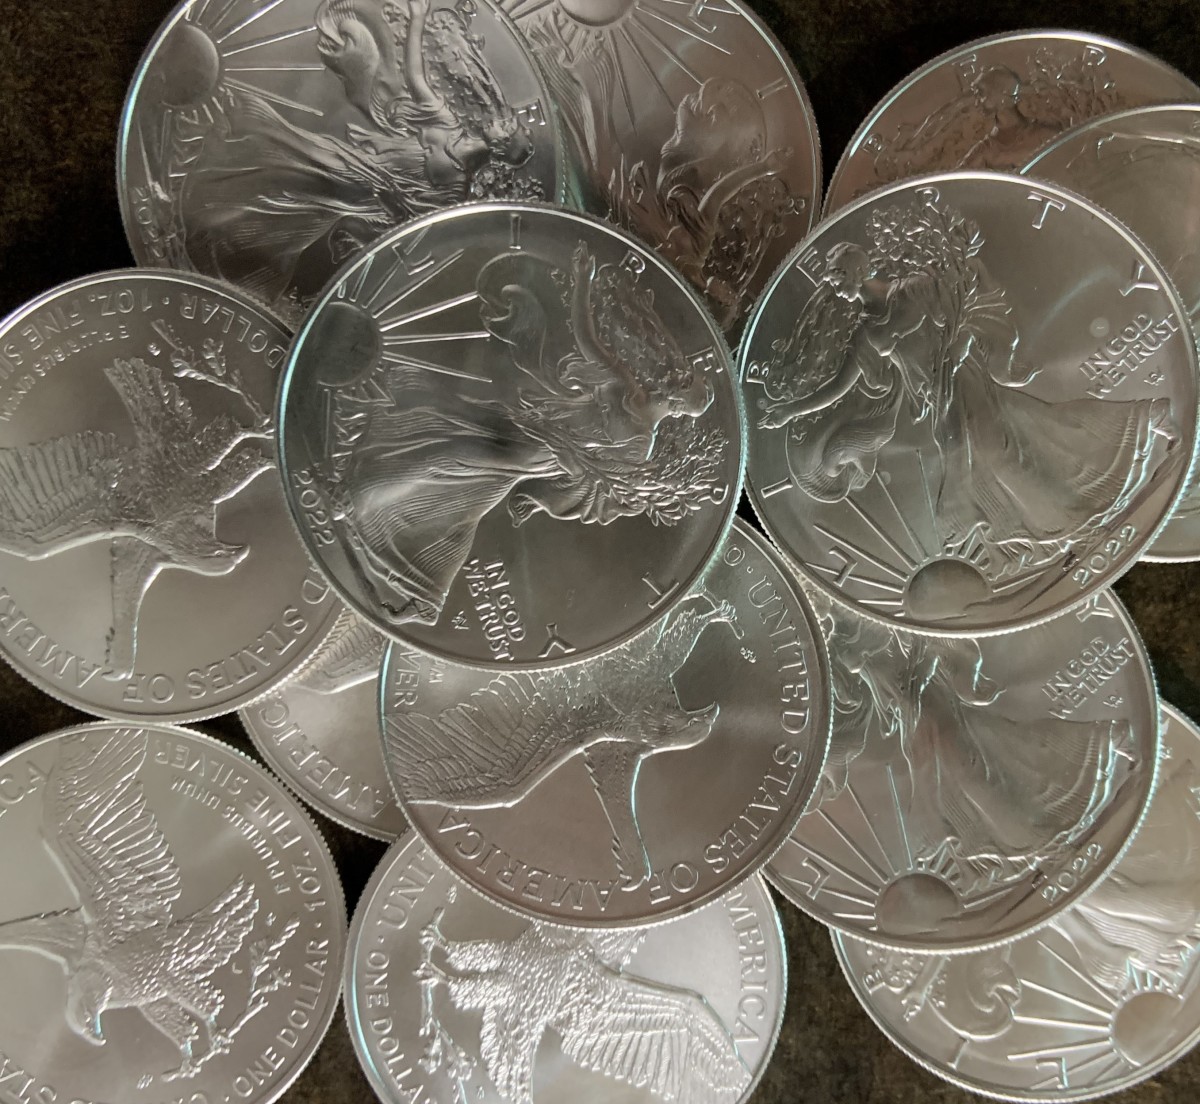 2022 American Silver Eagle coins.